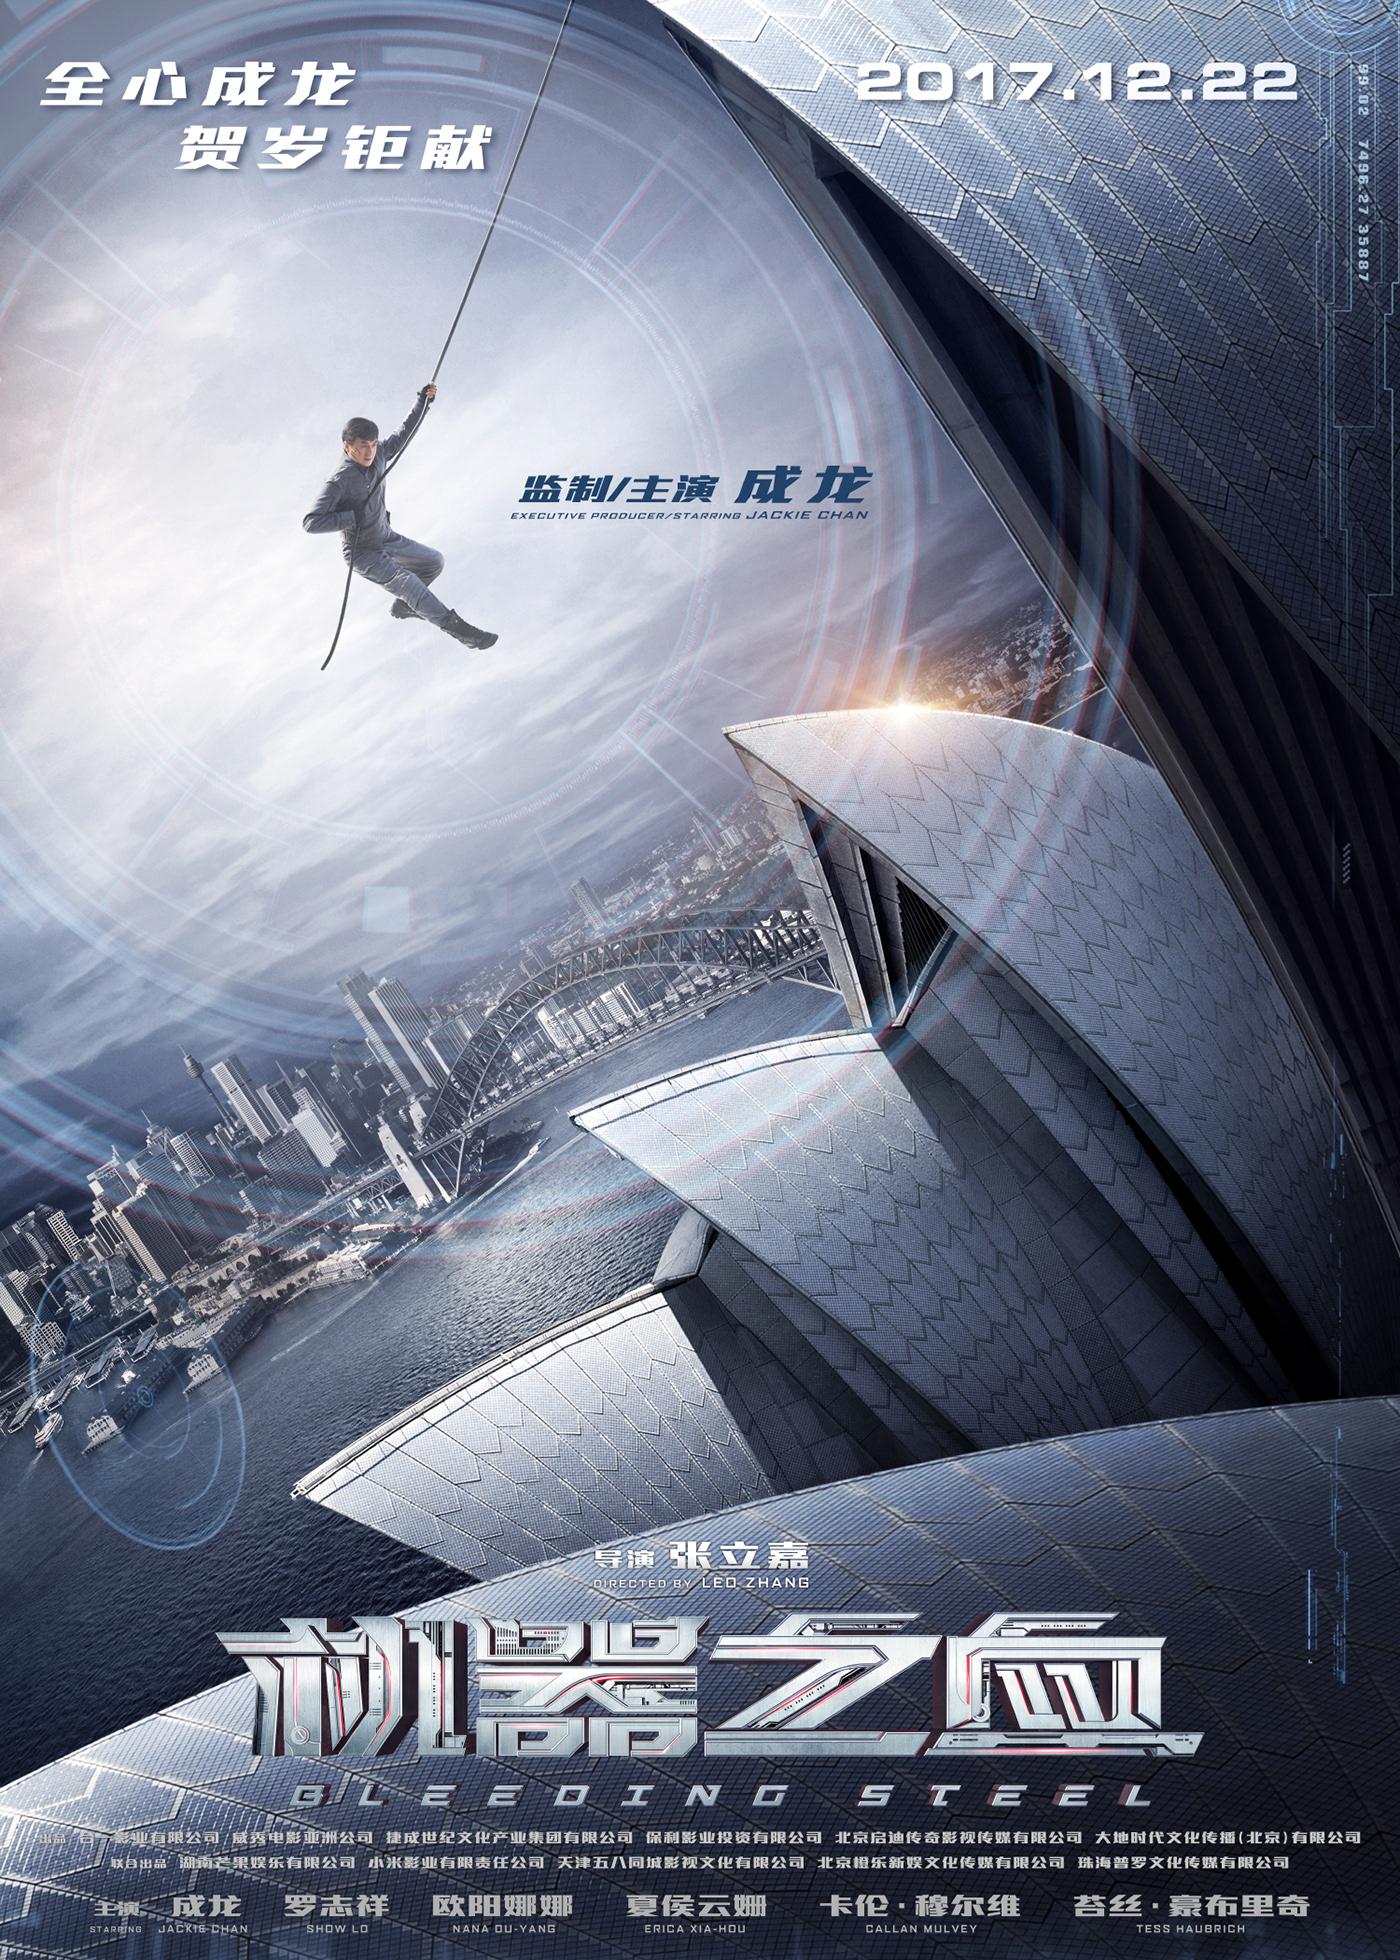 Jackie Chan movie poster